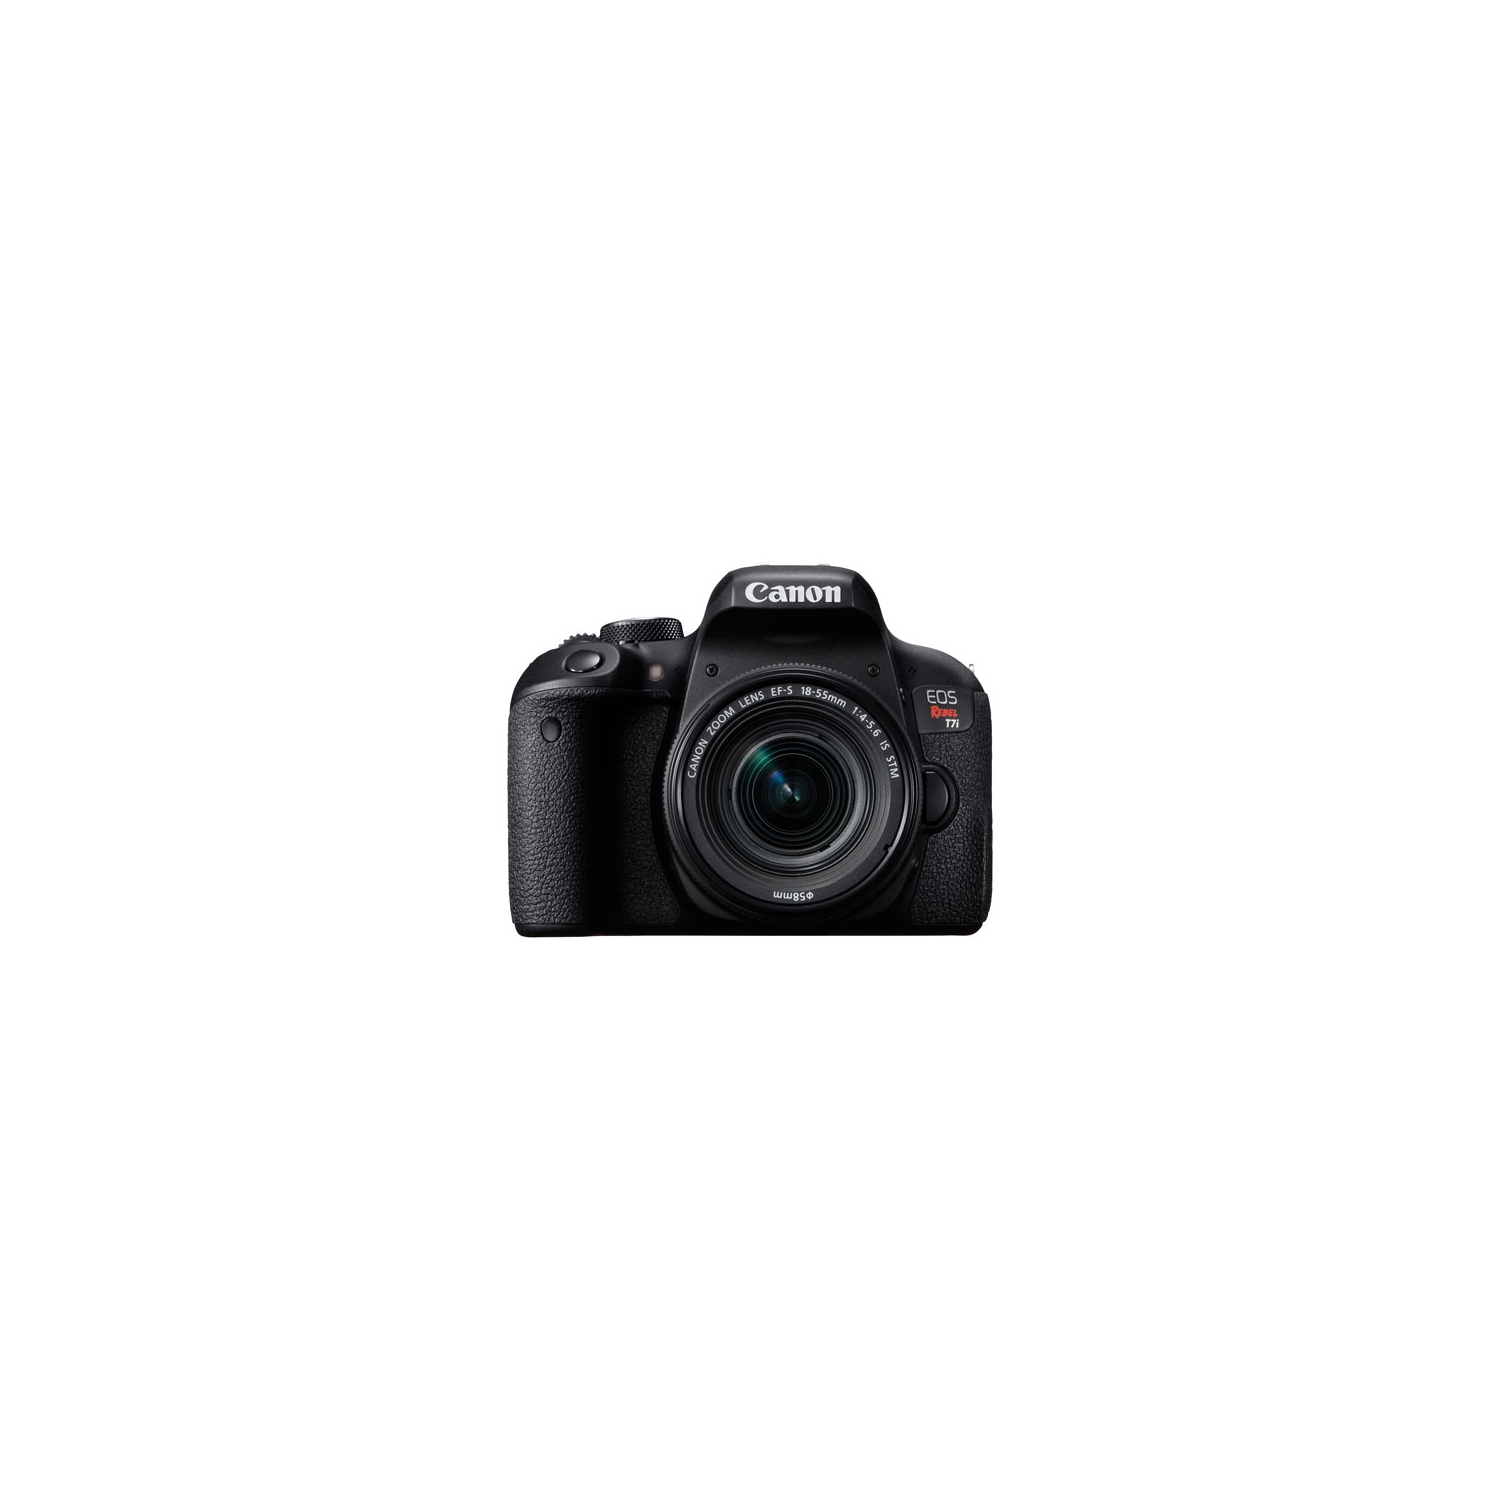 Refurbished (Good) - Canon EOS Rebel T7i DSLR Camera with 18-55mm f/4.5-5.6 IS STM Lens Kit